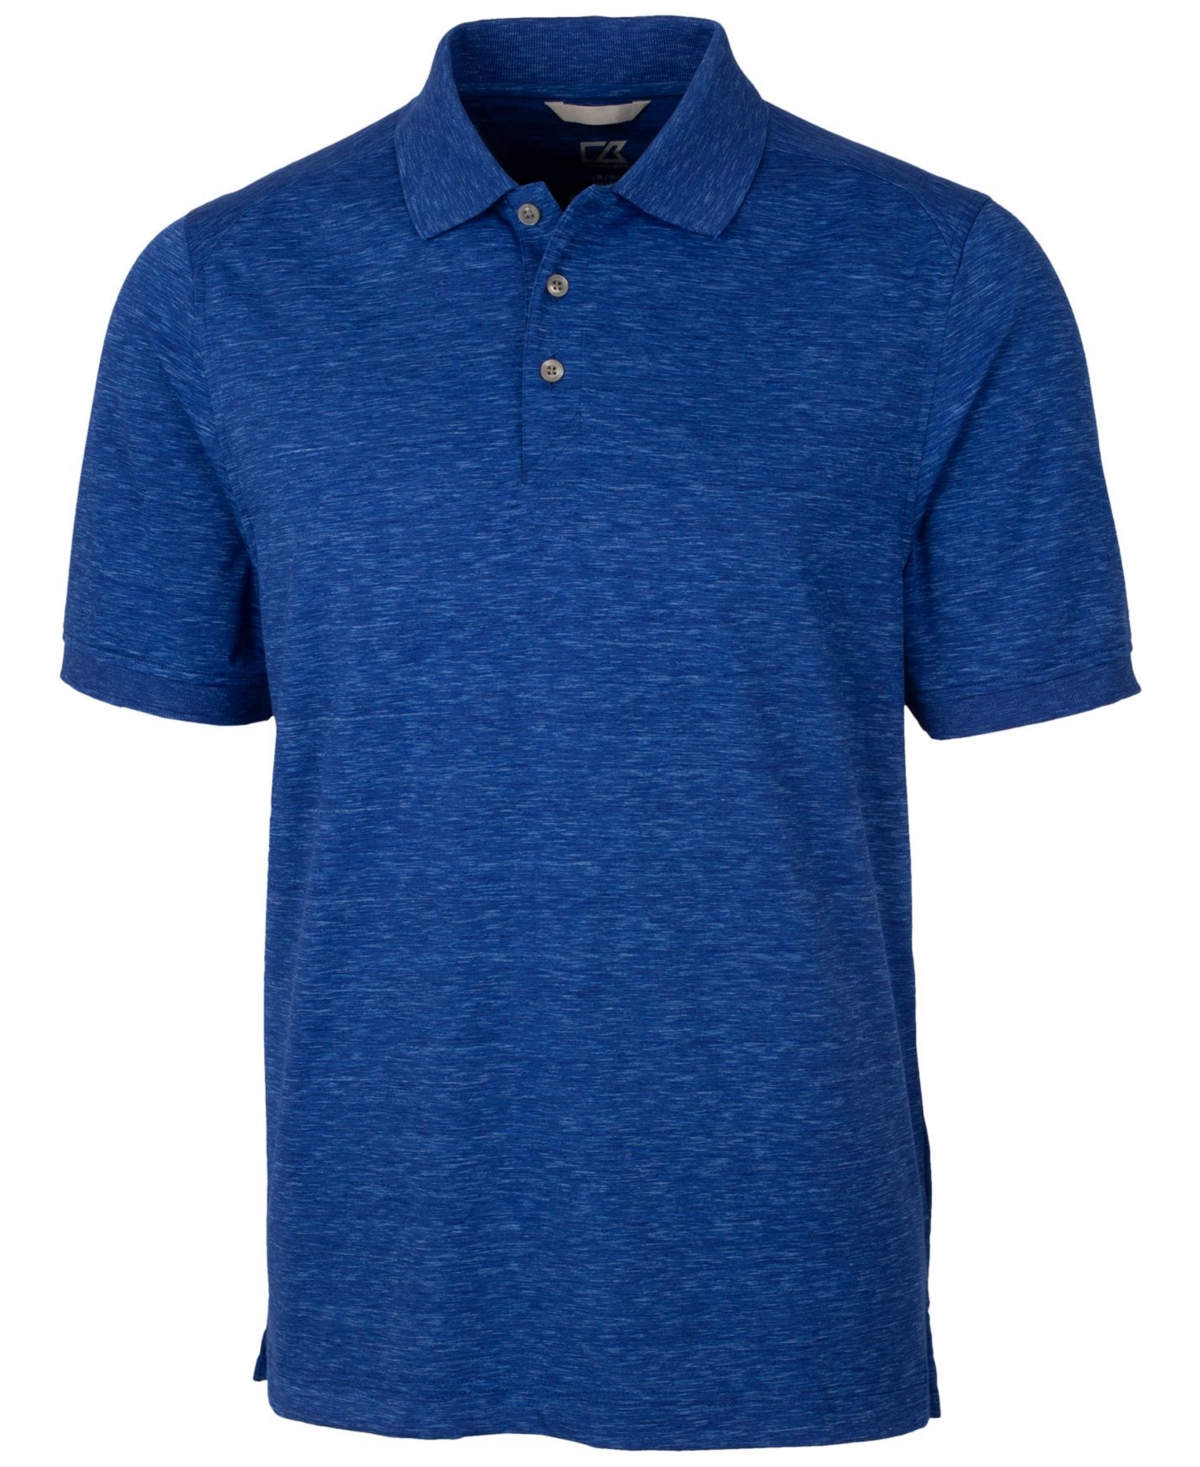 Advantage Tri-Blend Space Dye Men's Big and Tall Polo Shirt - Open Blue